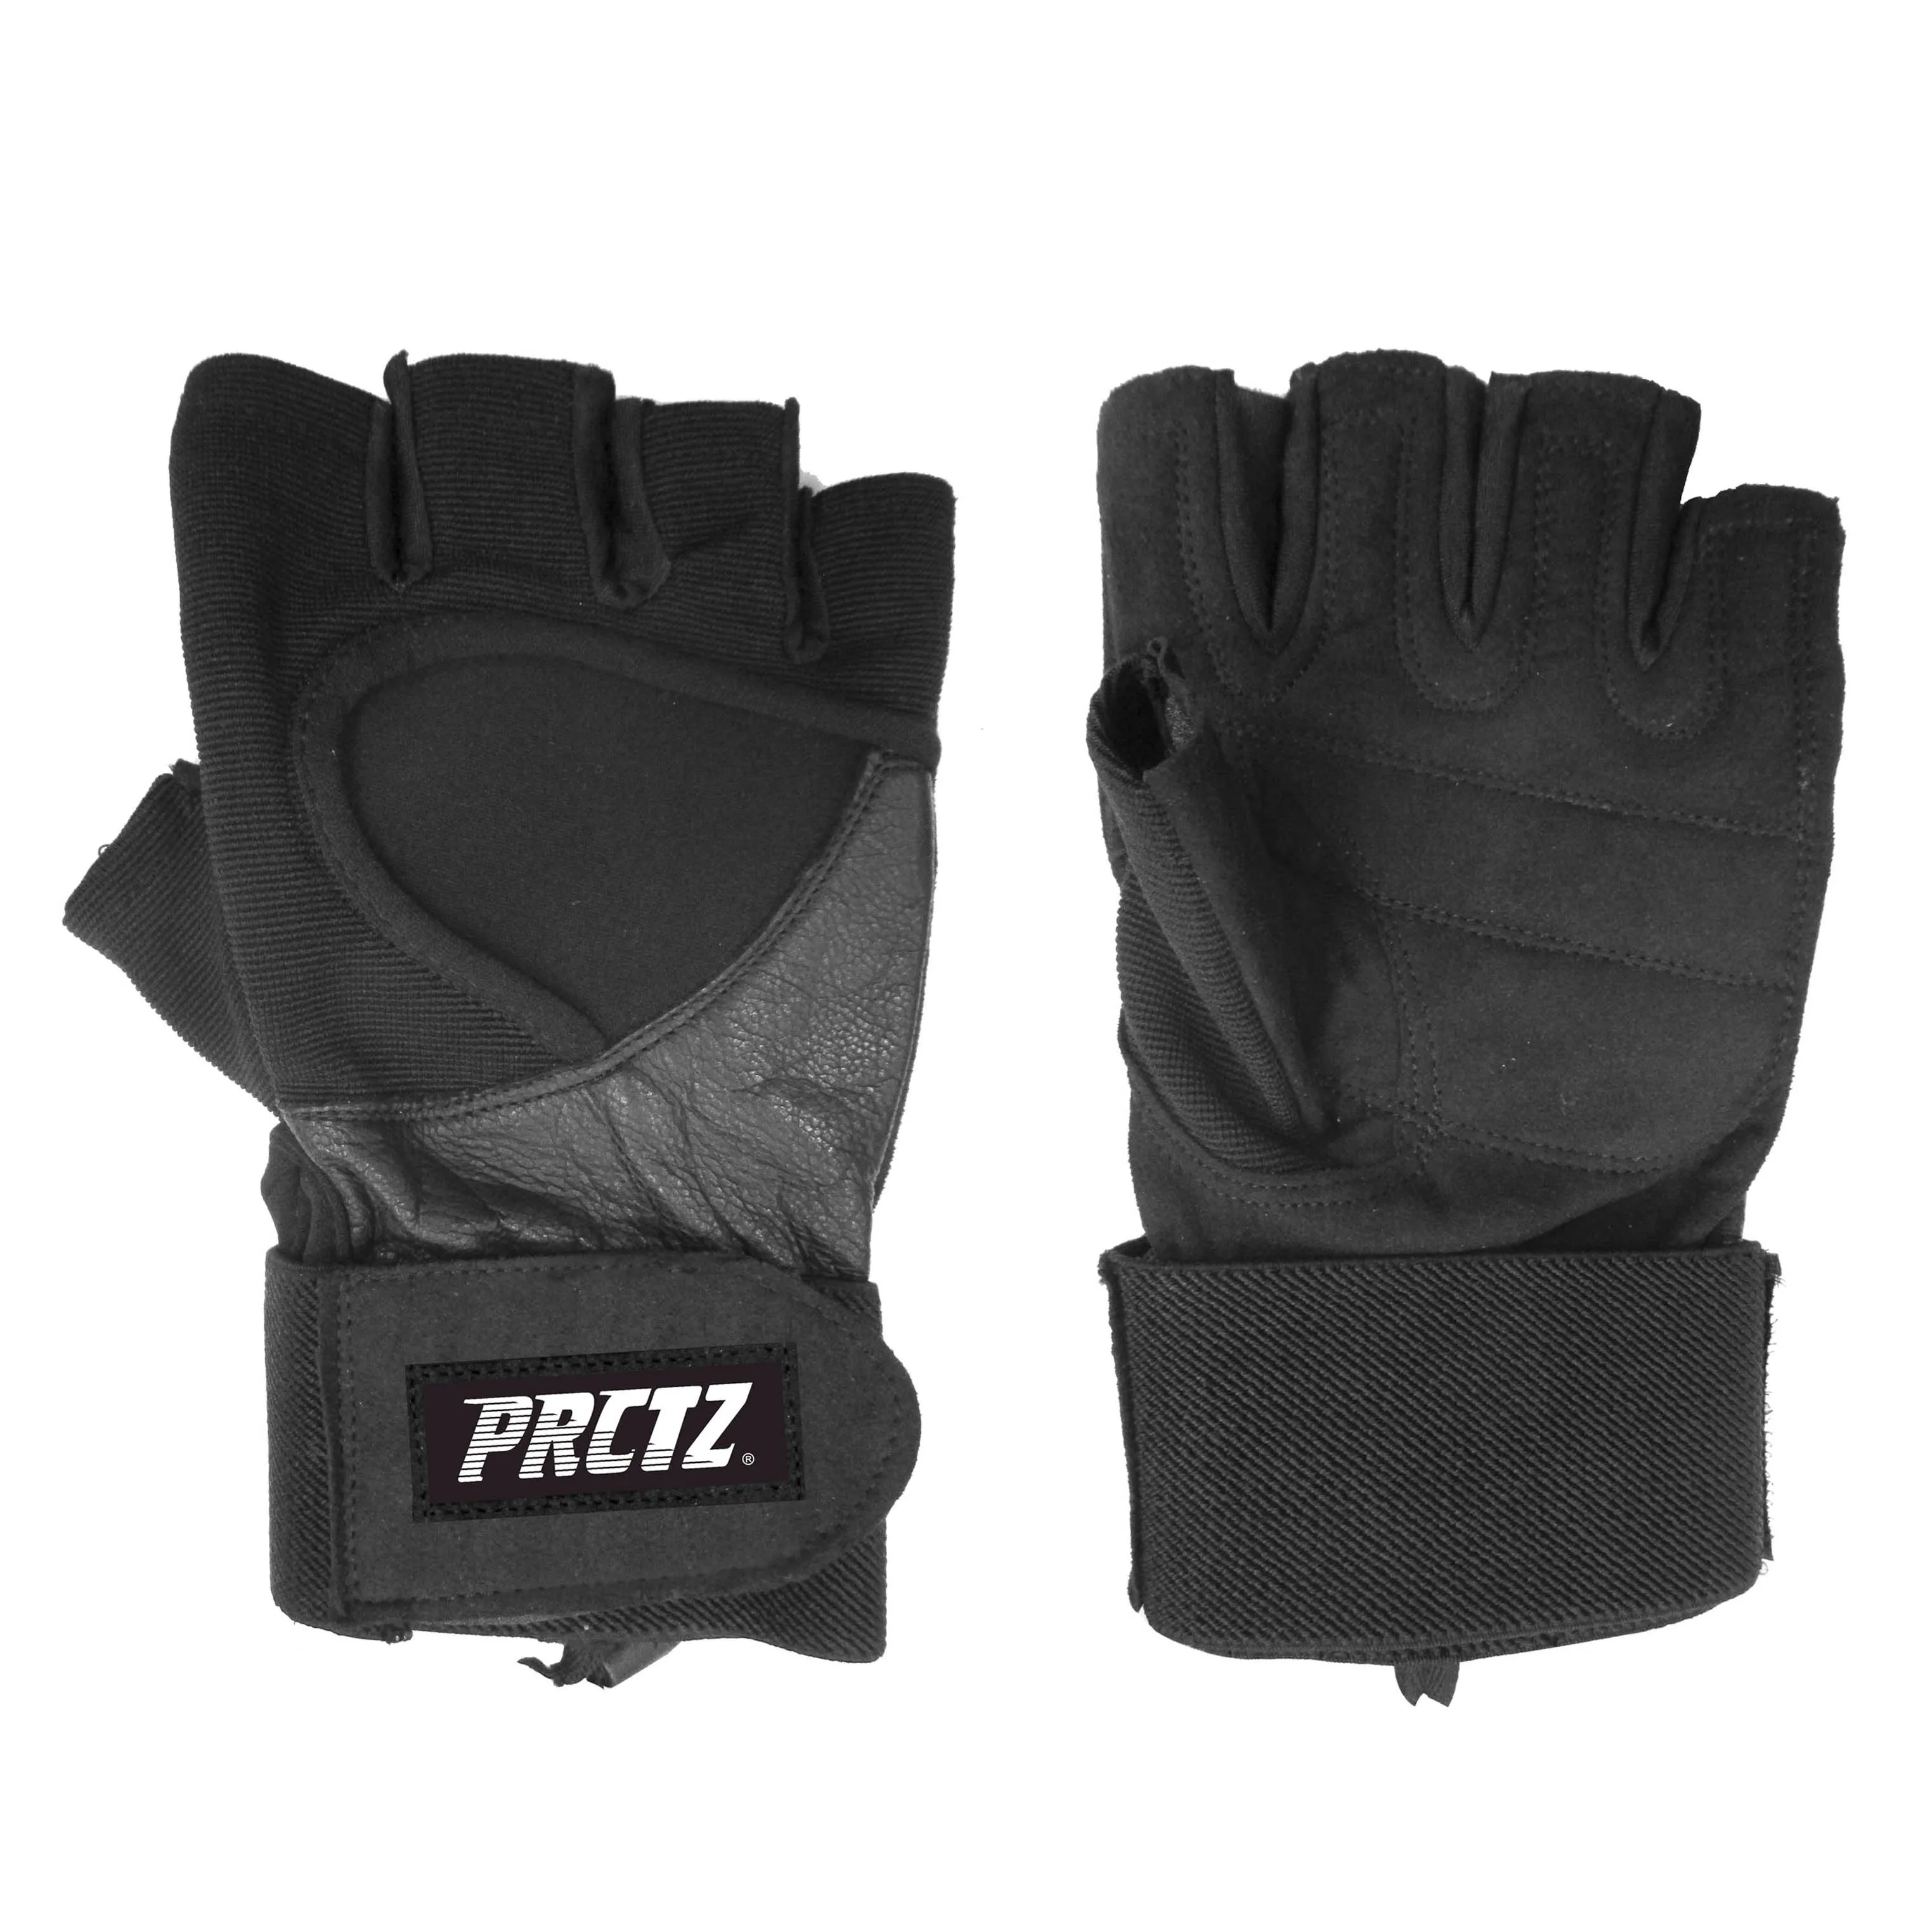 Перчатки для фитнеса c фиксатором запястья PRCTZ WRIST-WRAP GLOVES "XL" с гарантией